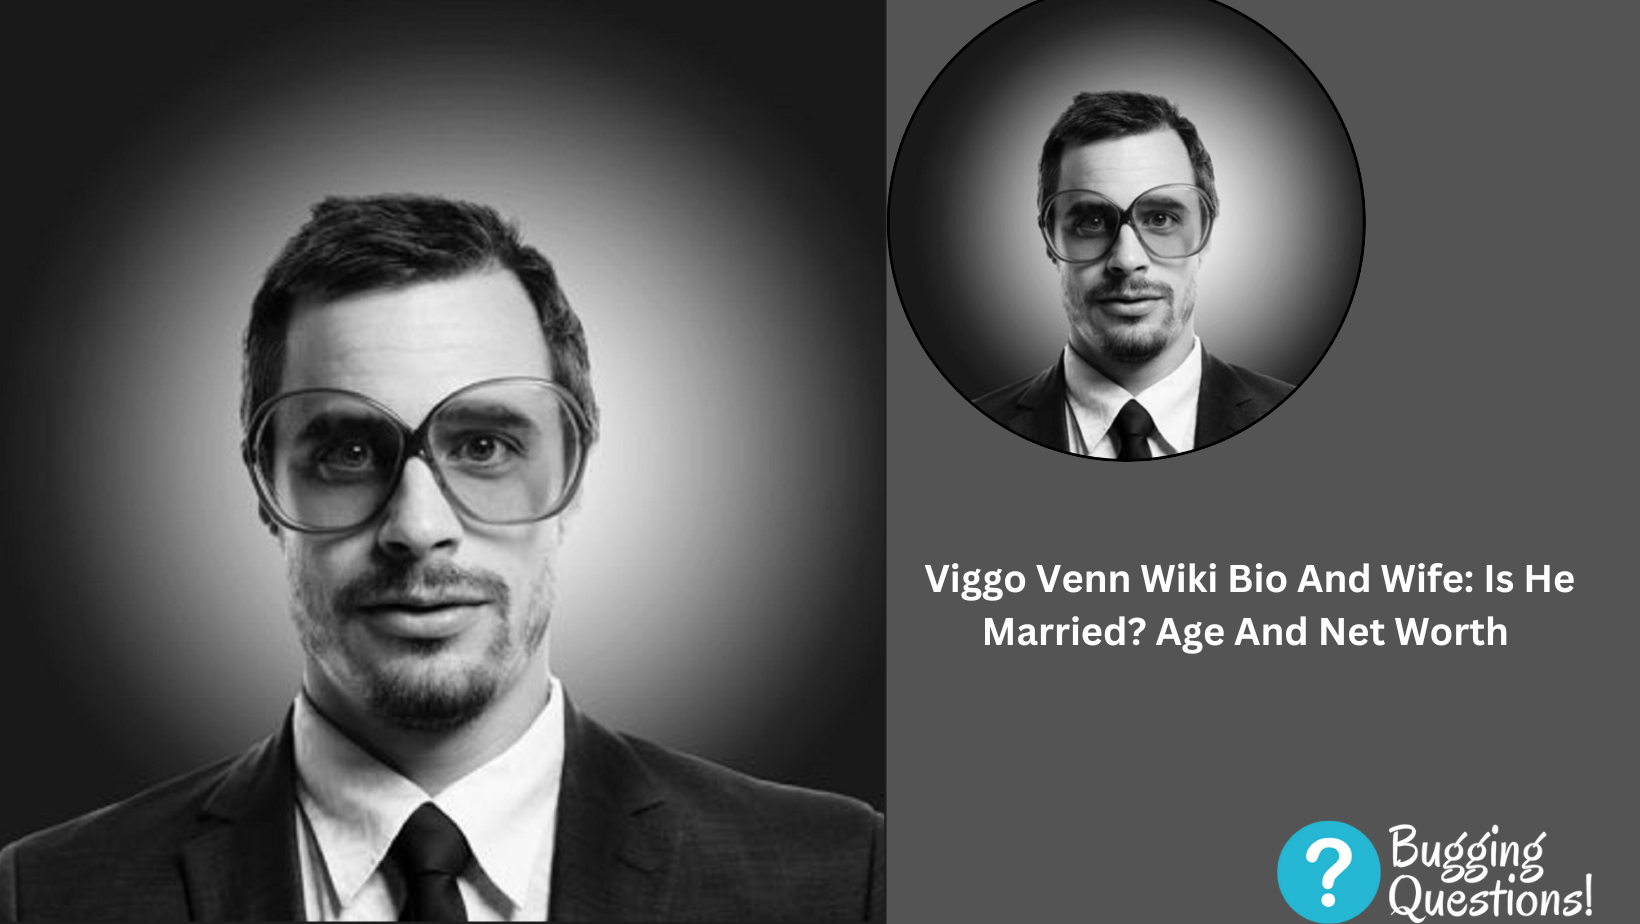 Viggo Venn Wiki Bio And Wife